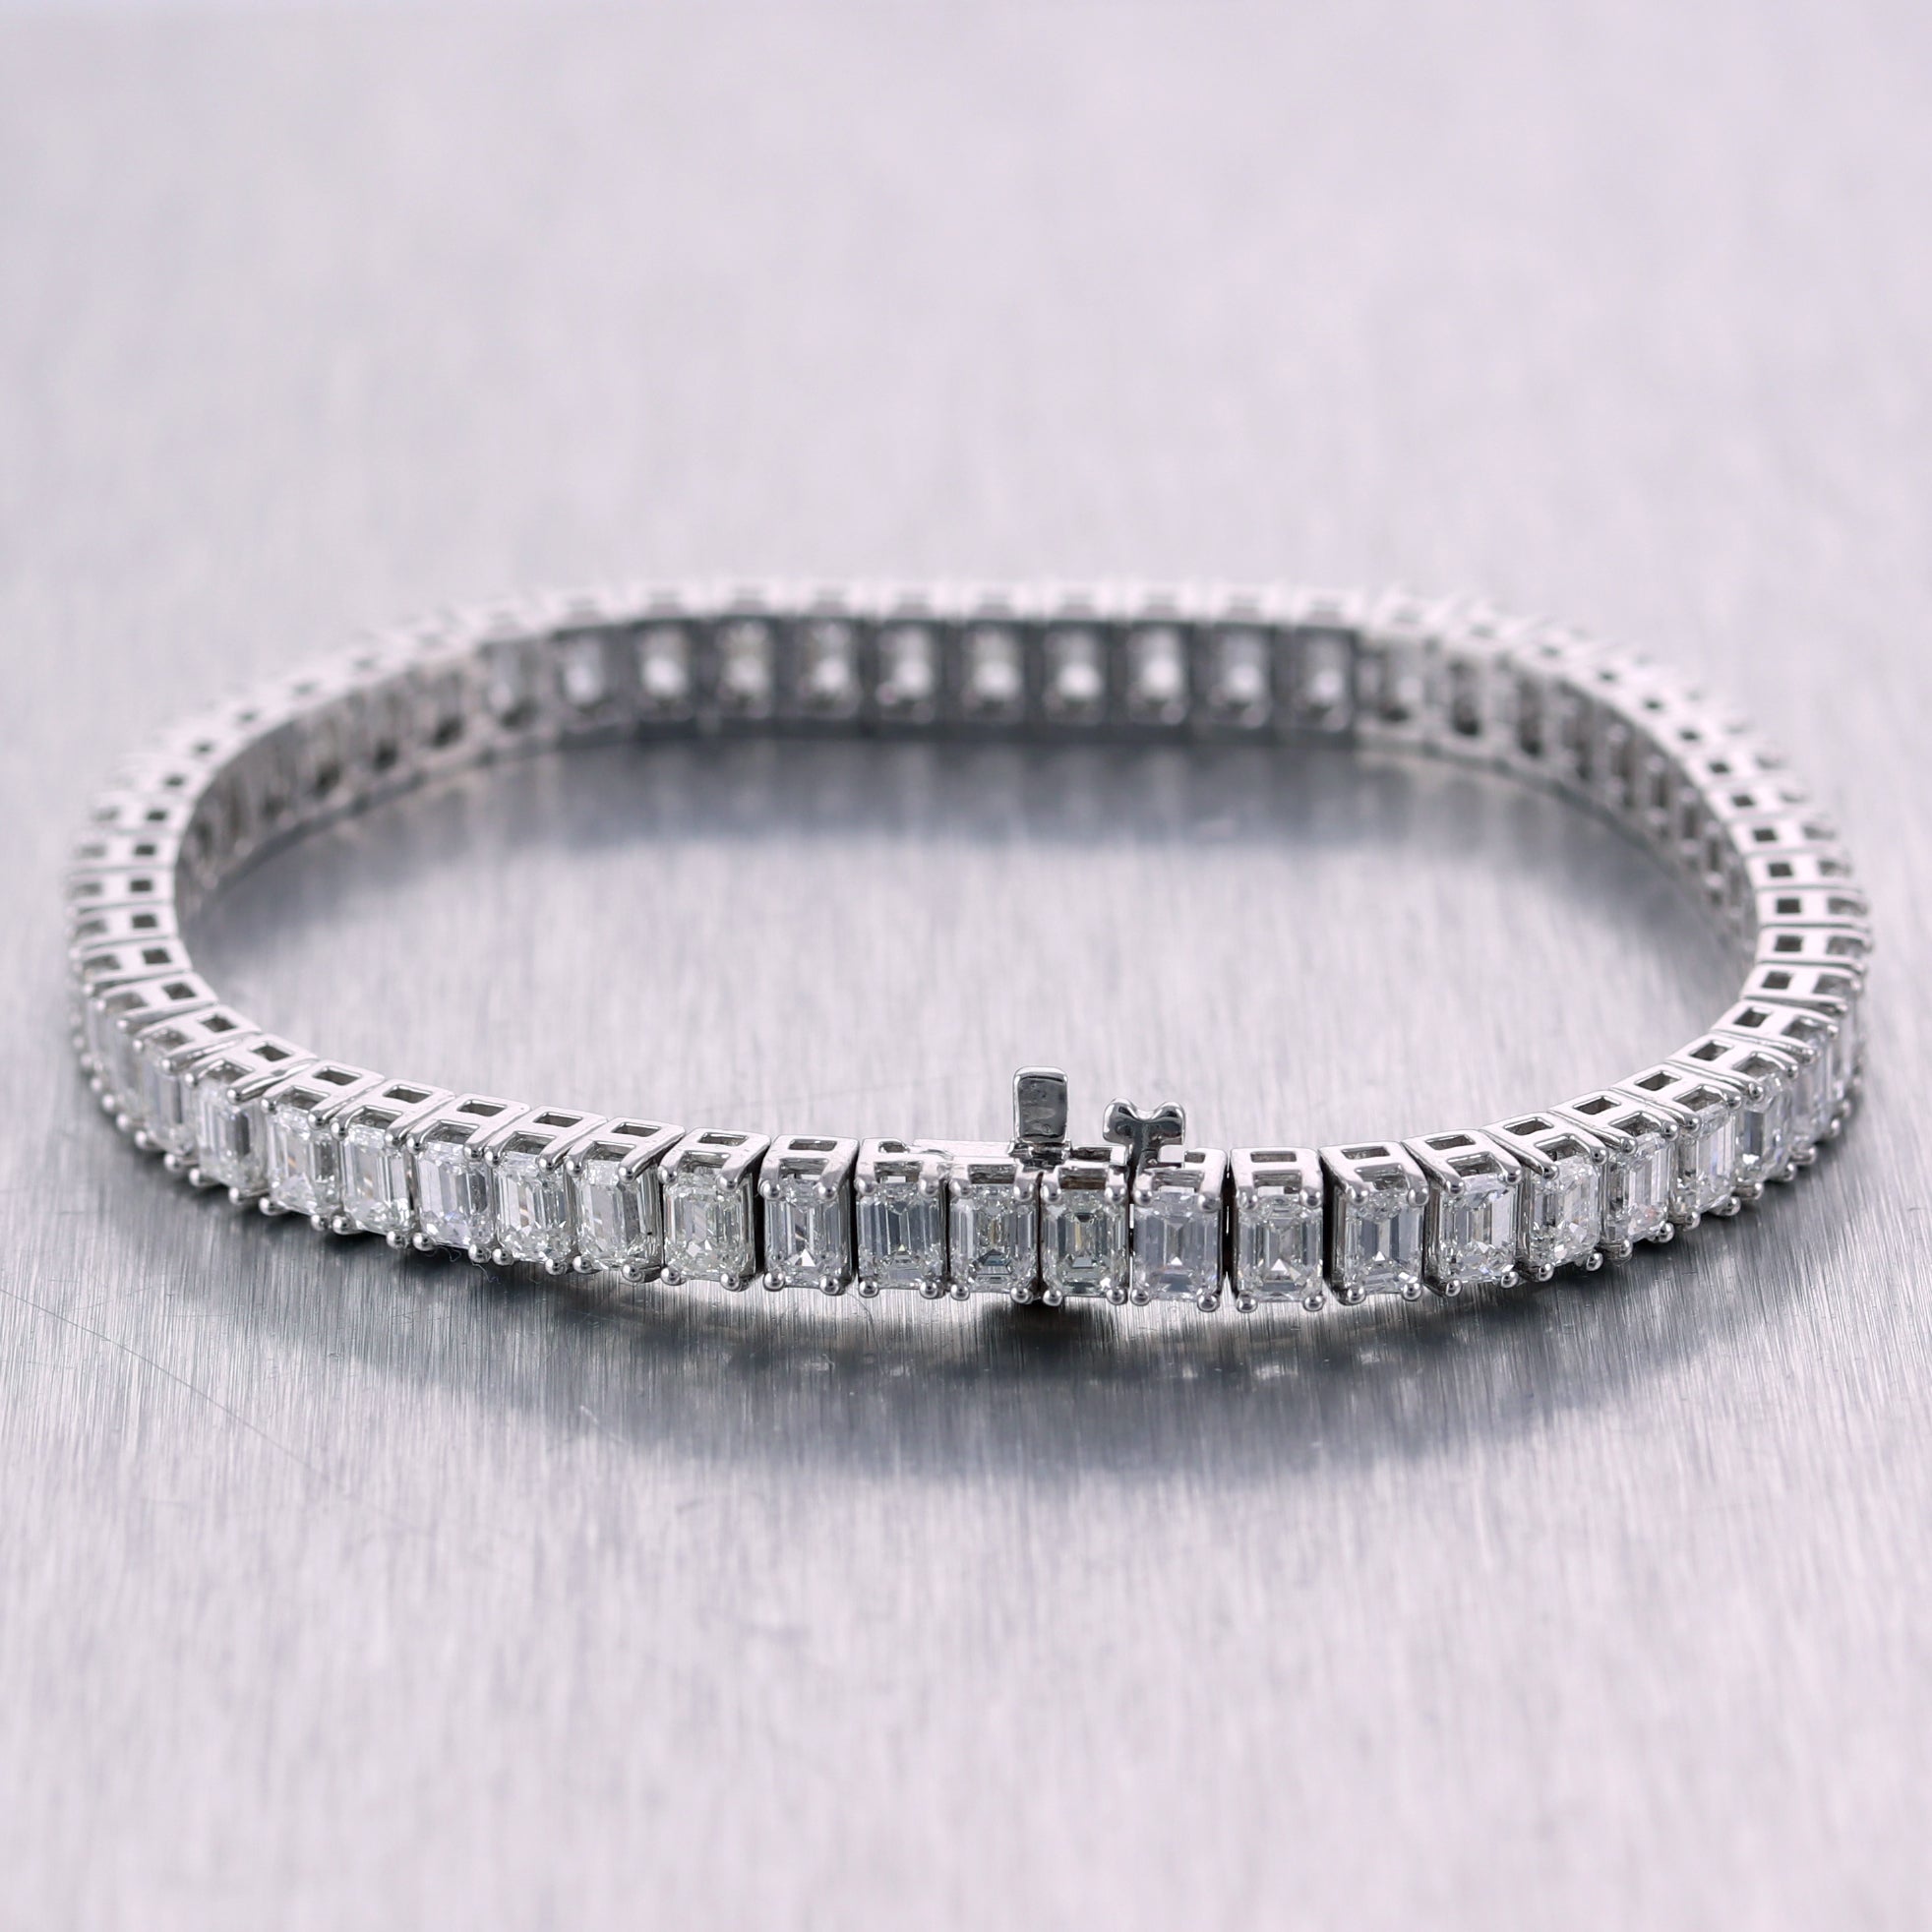 Baguette Diamond Bracelets Give You Serious Cravings - CaratsDirect2u Blog